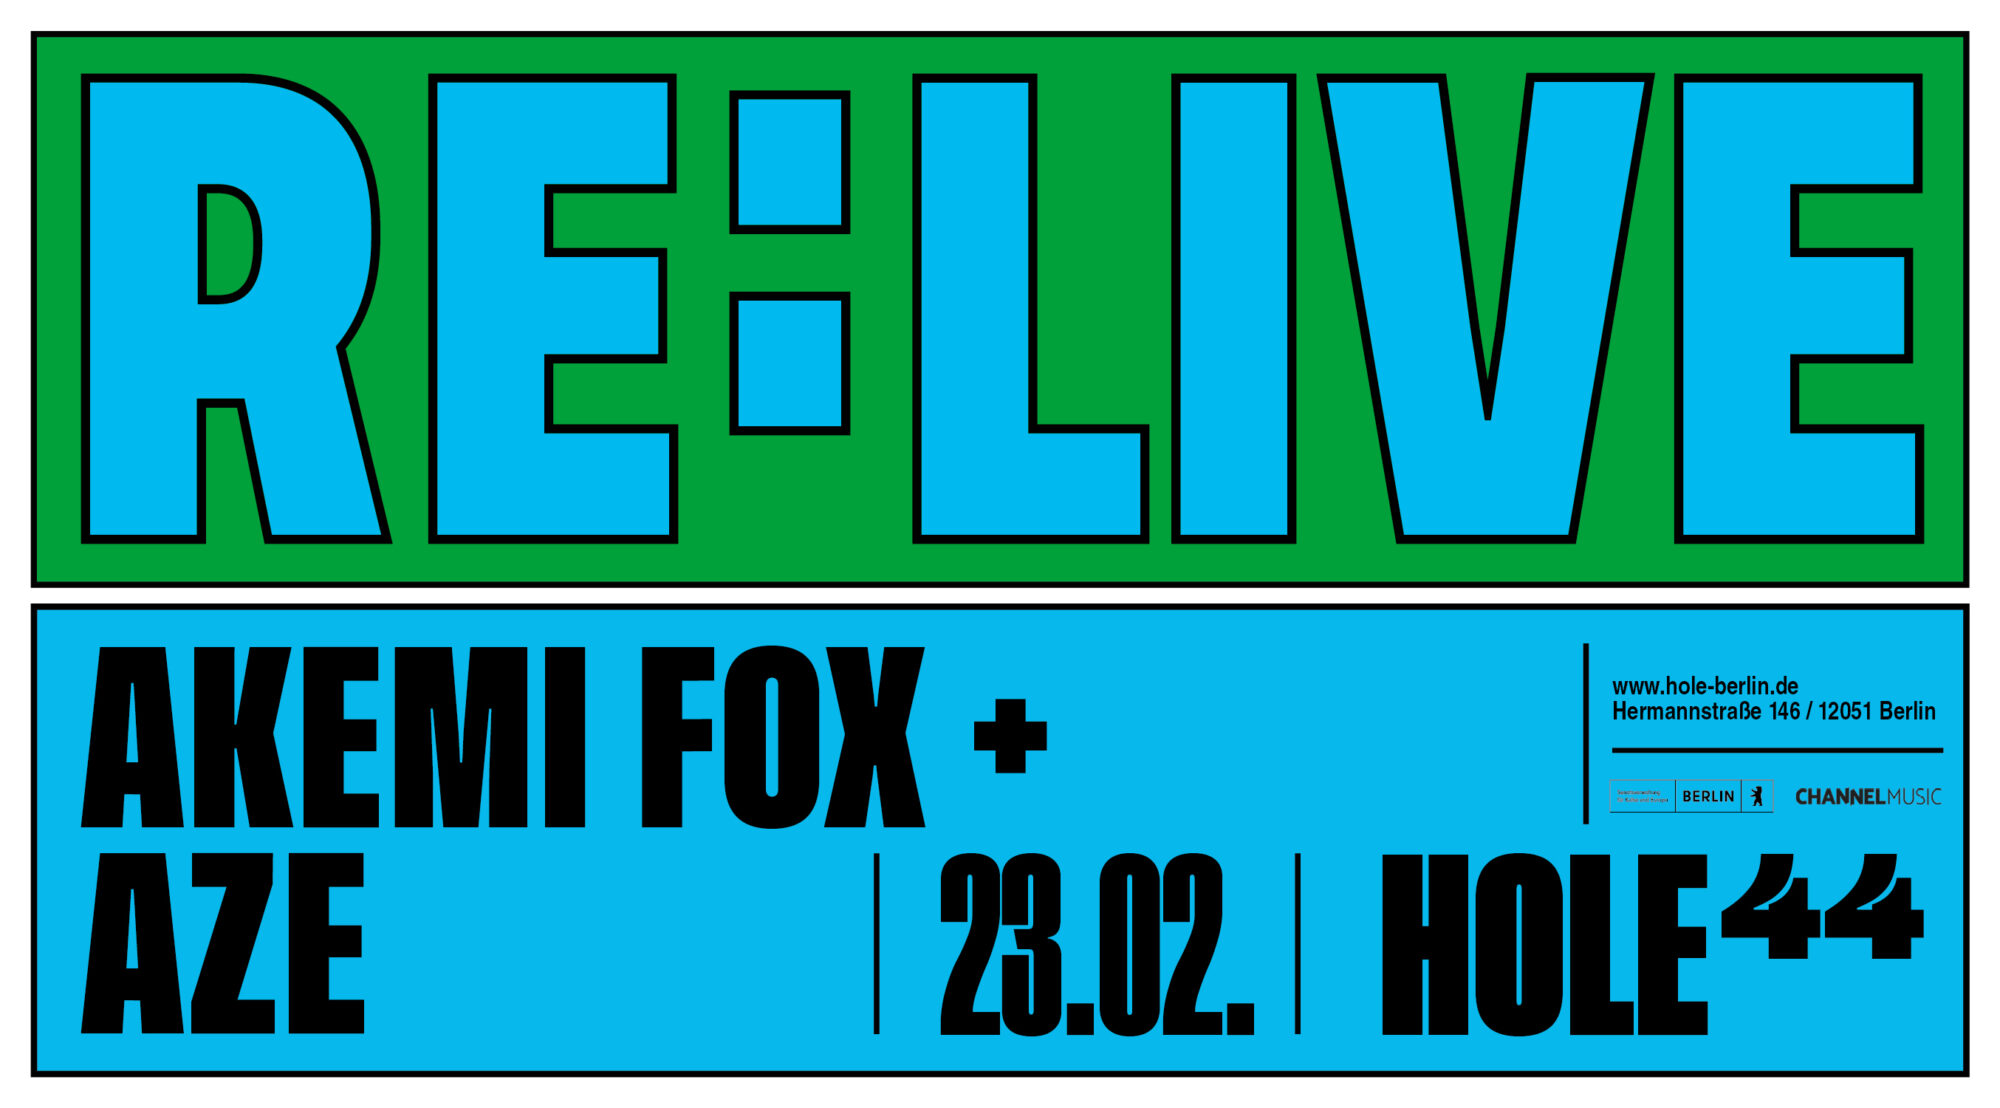 RE:LIVE - Akemi Fox + Aze